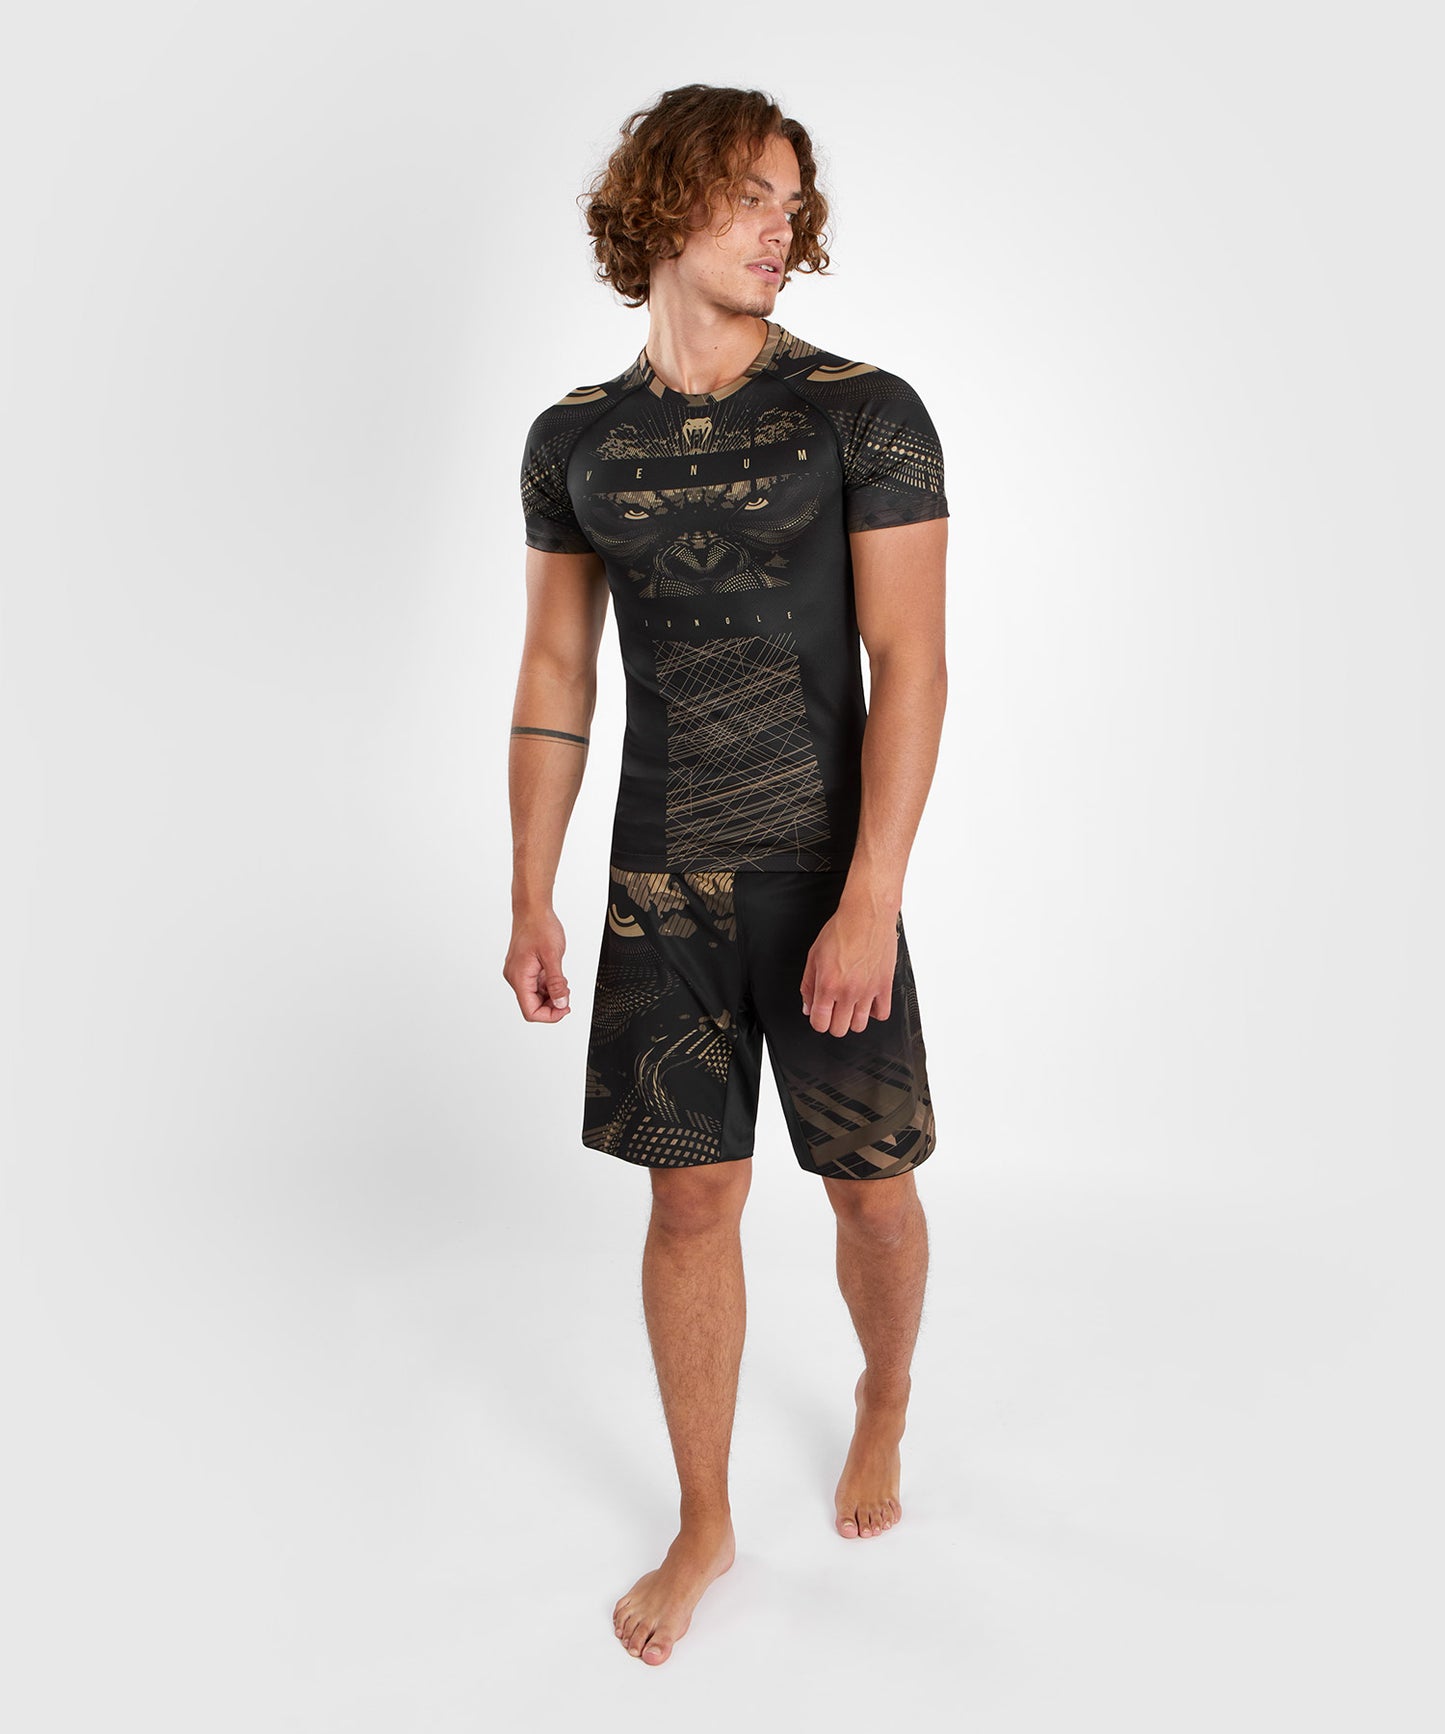 Venum Gorilla Jungle Rashguard Short Sleeves - Black/Sand